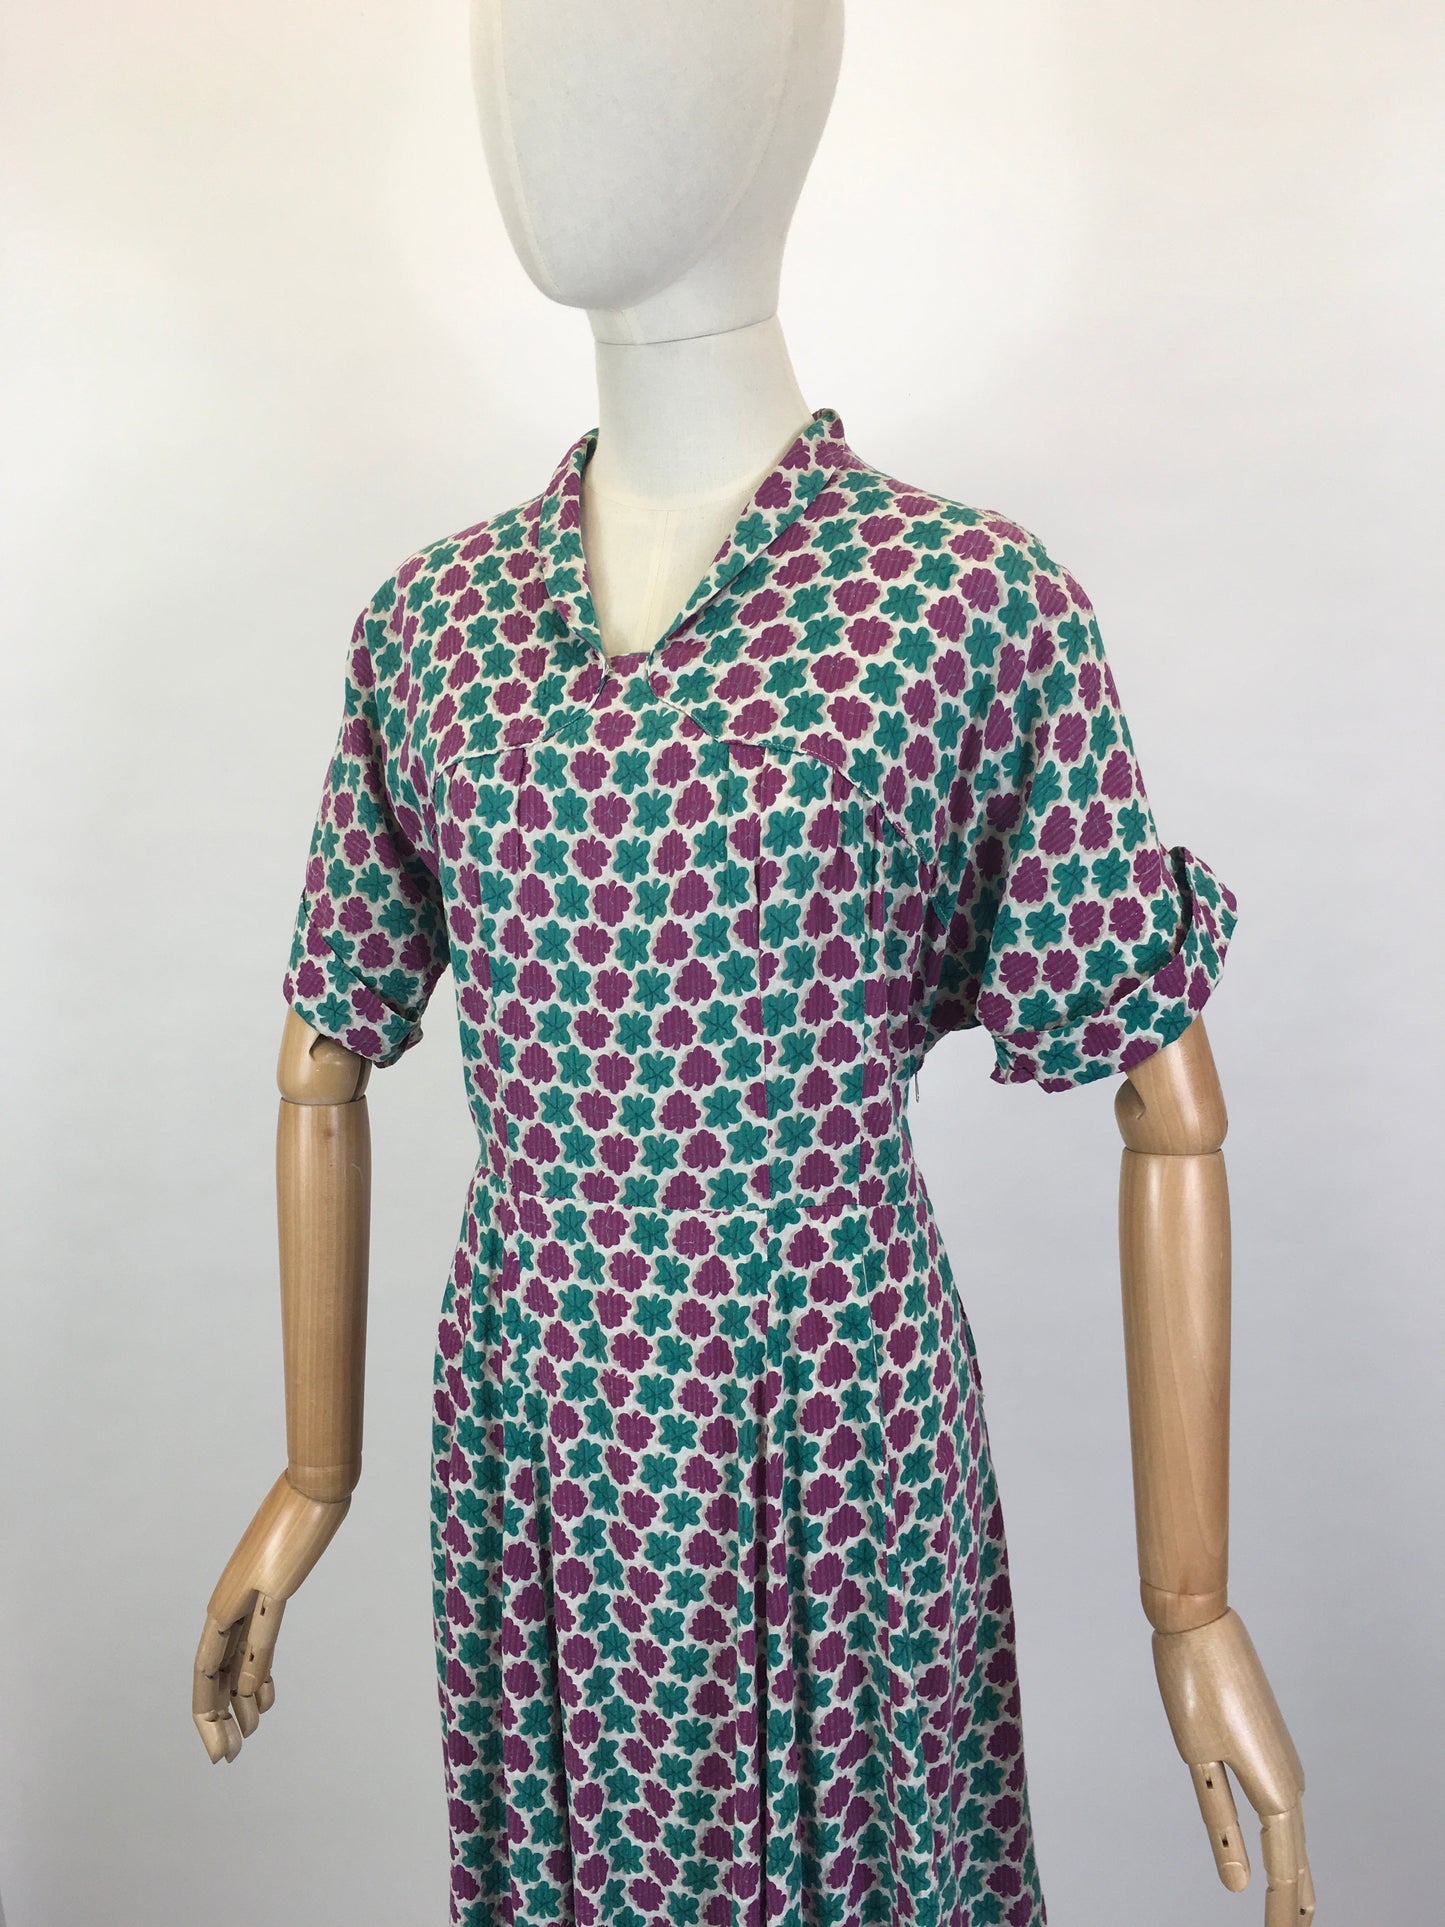 Original 1940’s Darling Day Dress  As is - In Purple, Turquoise & White Seersucker